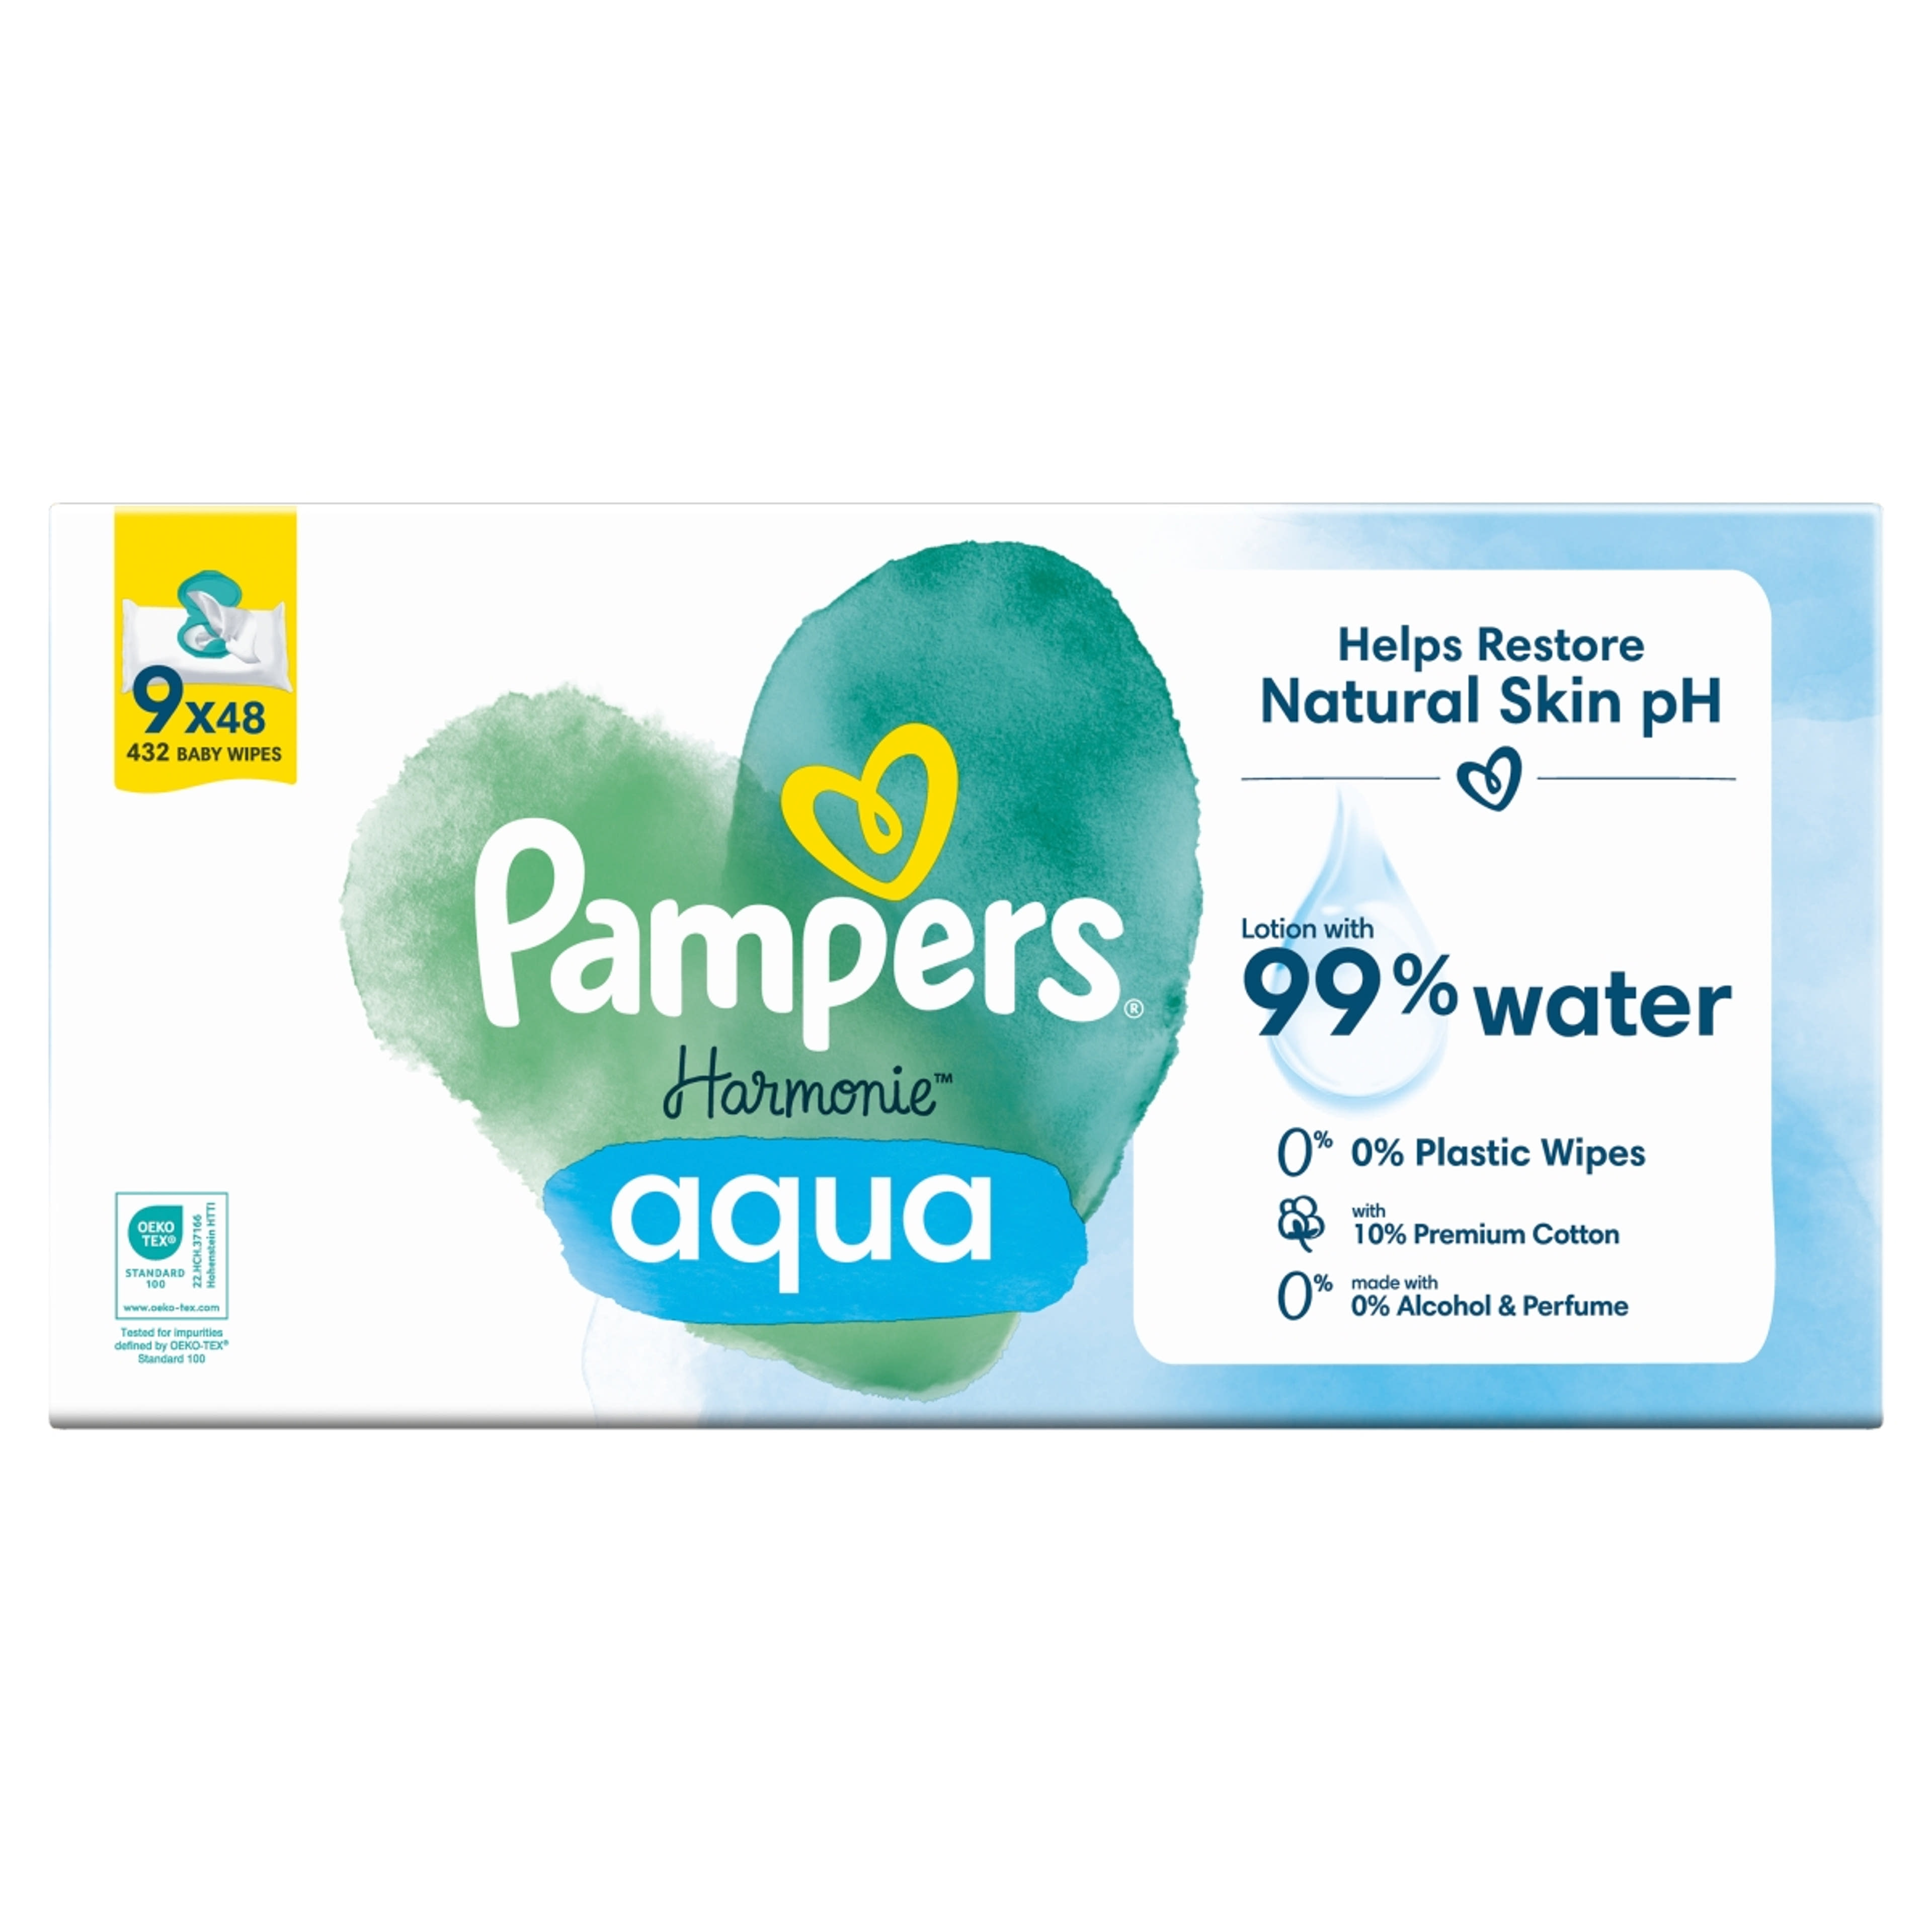 Pampers Harmonie Aqua nedves törlőkendő 9x 48 db - 432 db-1